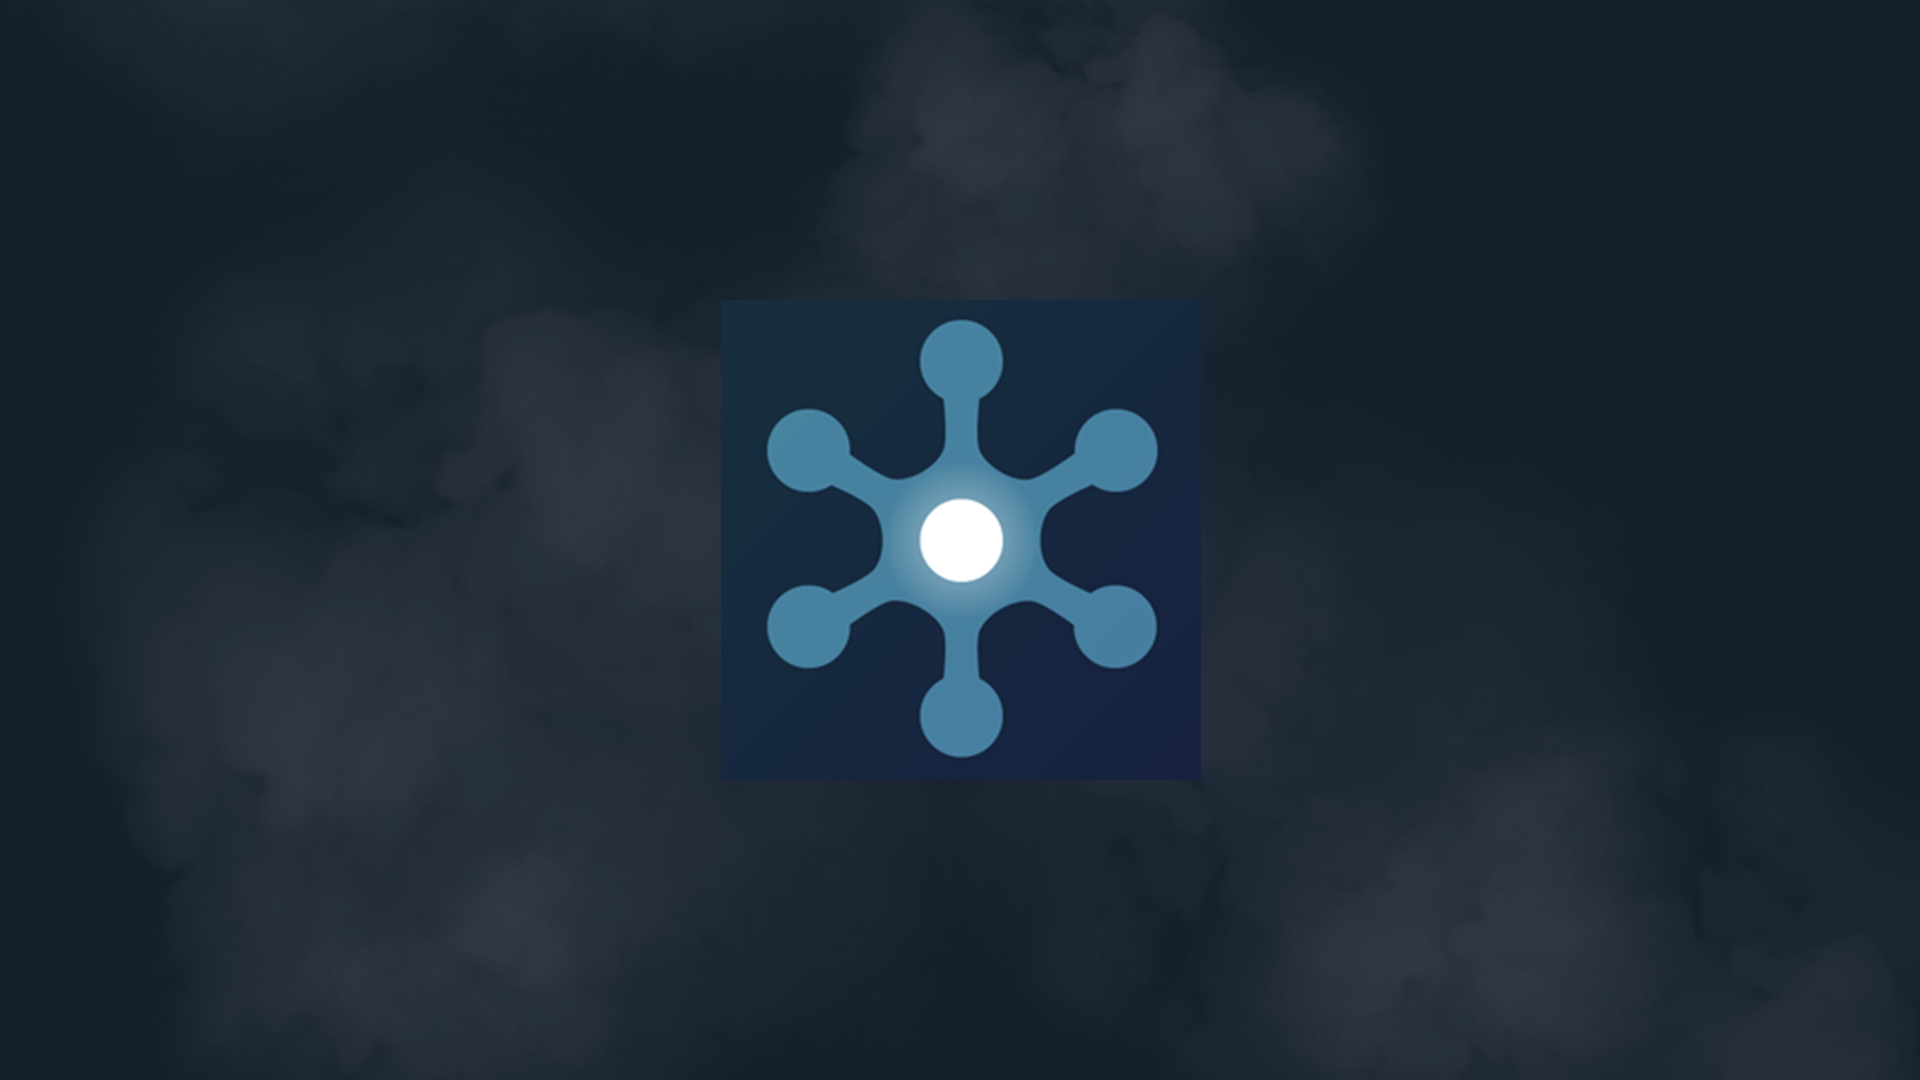 Icon for Blue neuron